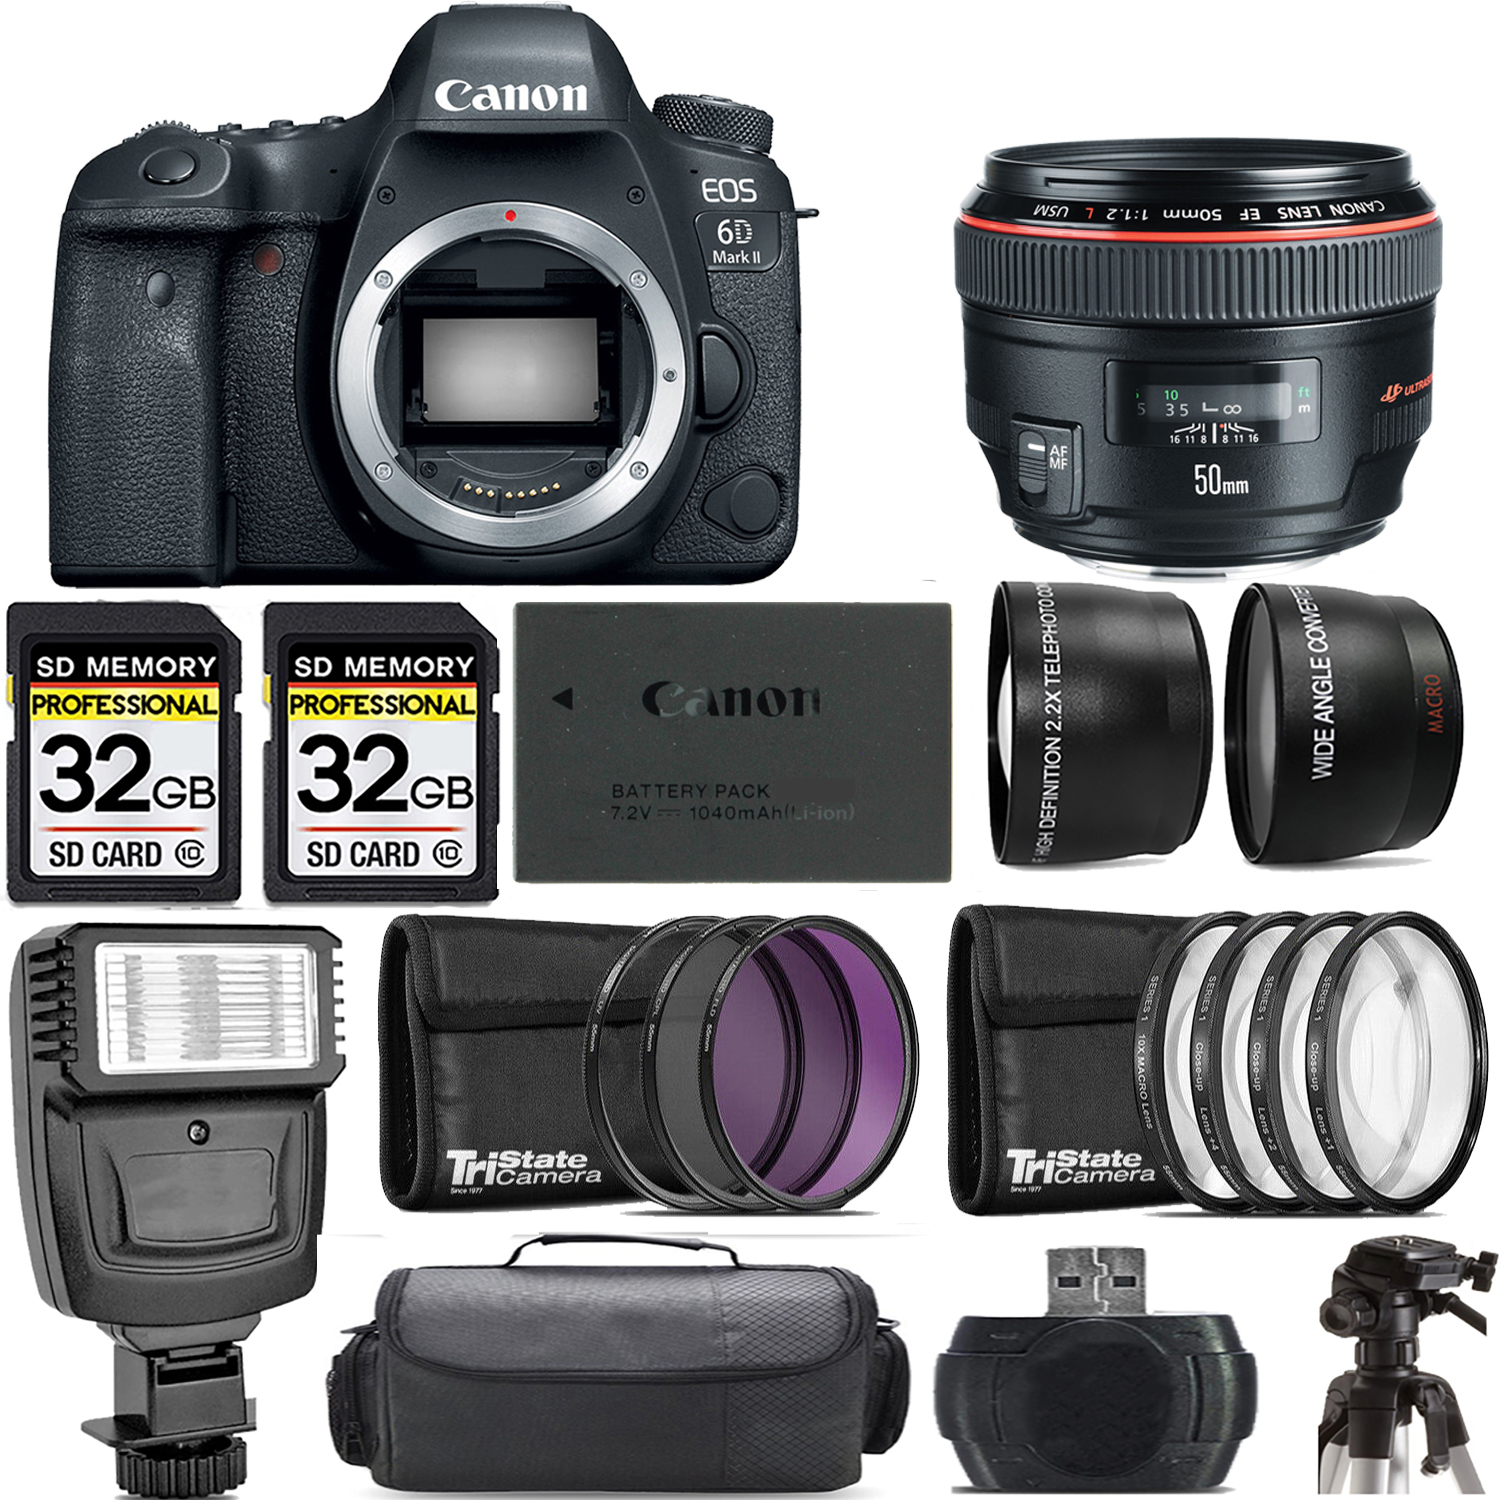 EOS 6D Mark II DSLR Camera +50mm f/1.2L USM Lens +Flash- Kit *FREE SHIPPING*